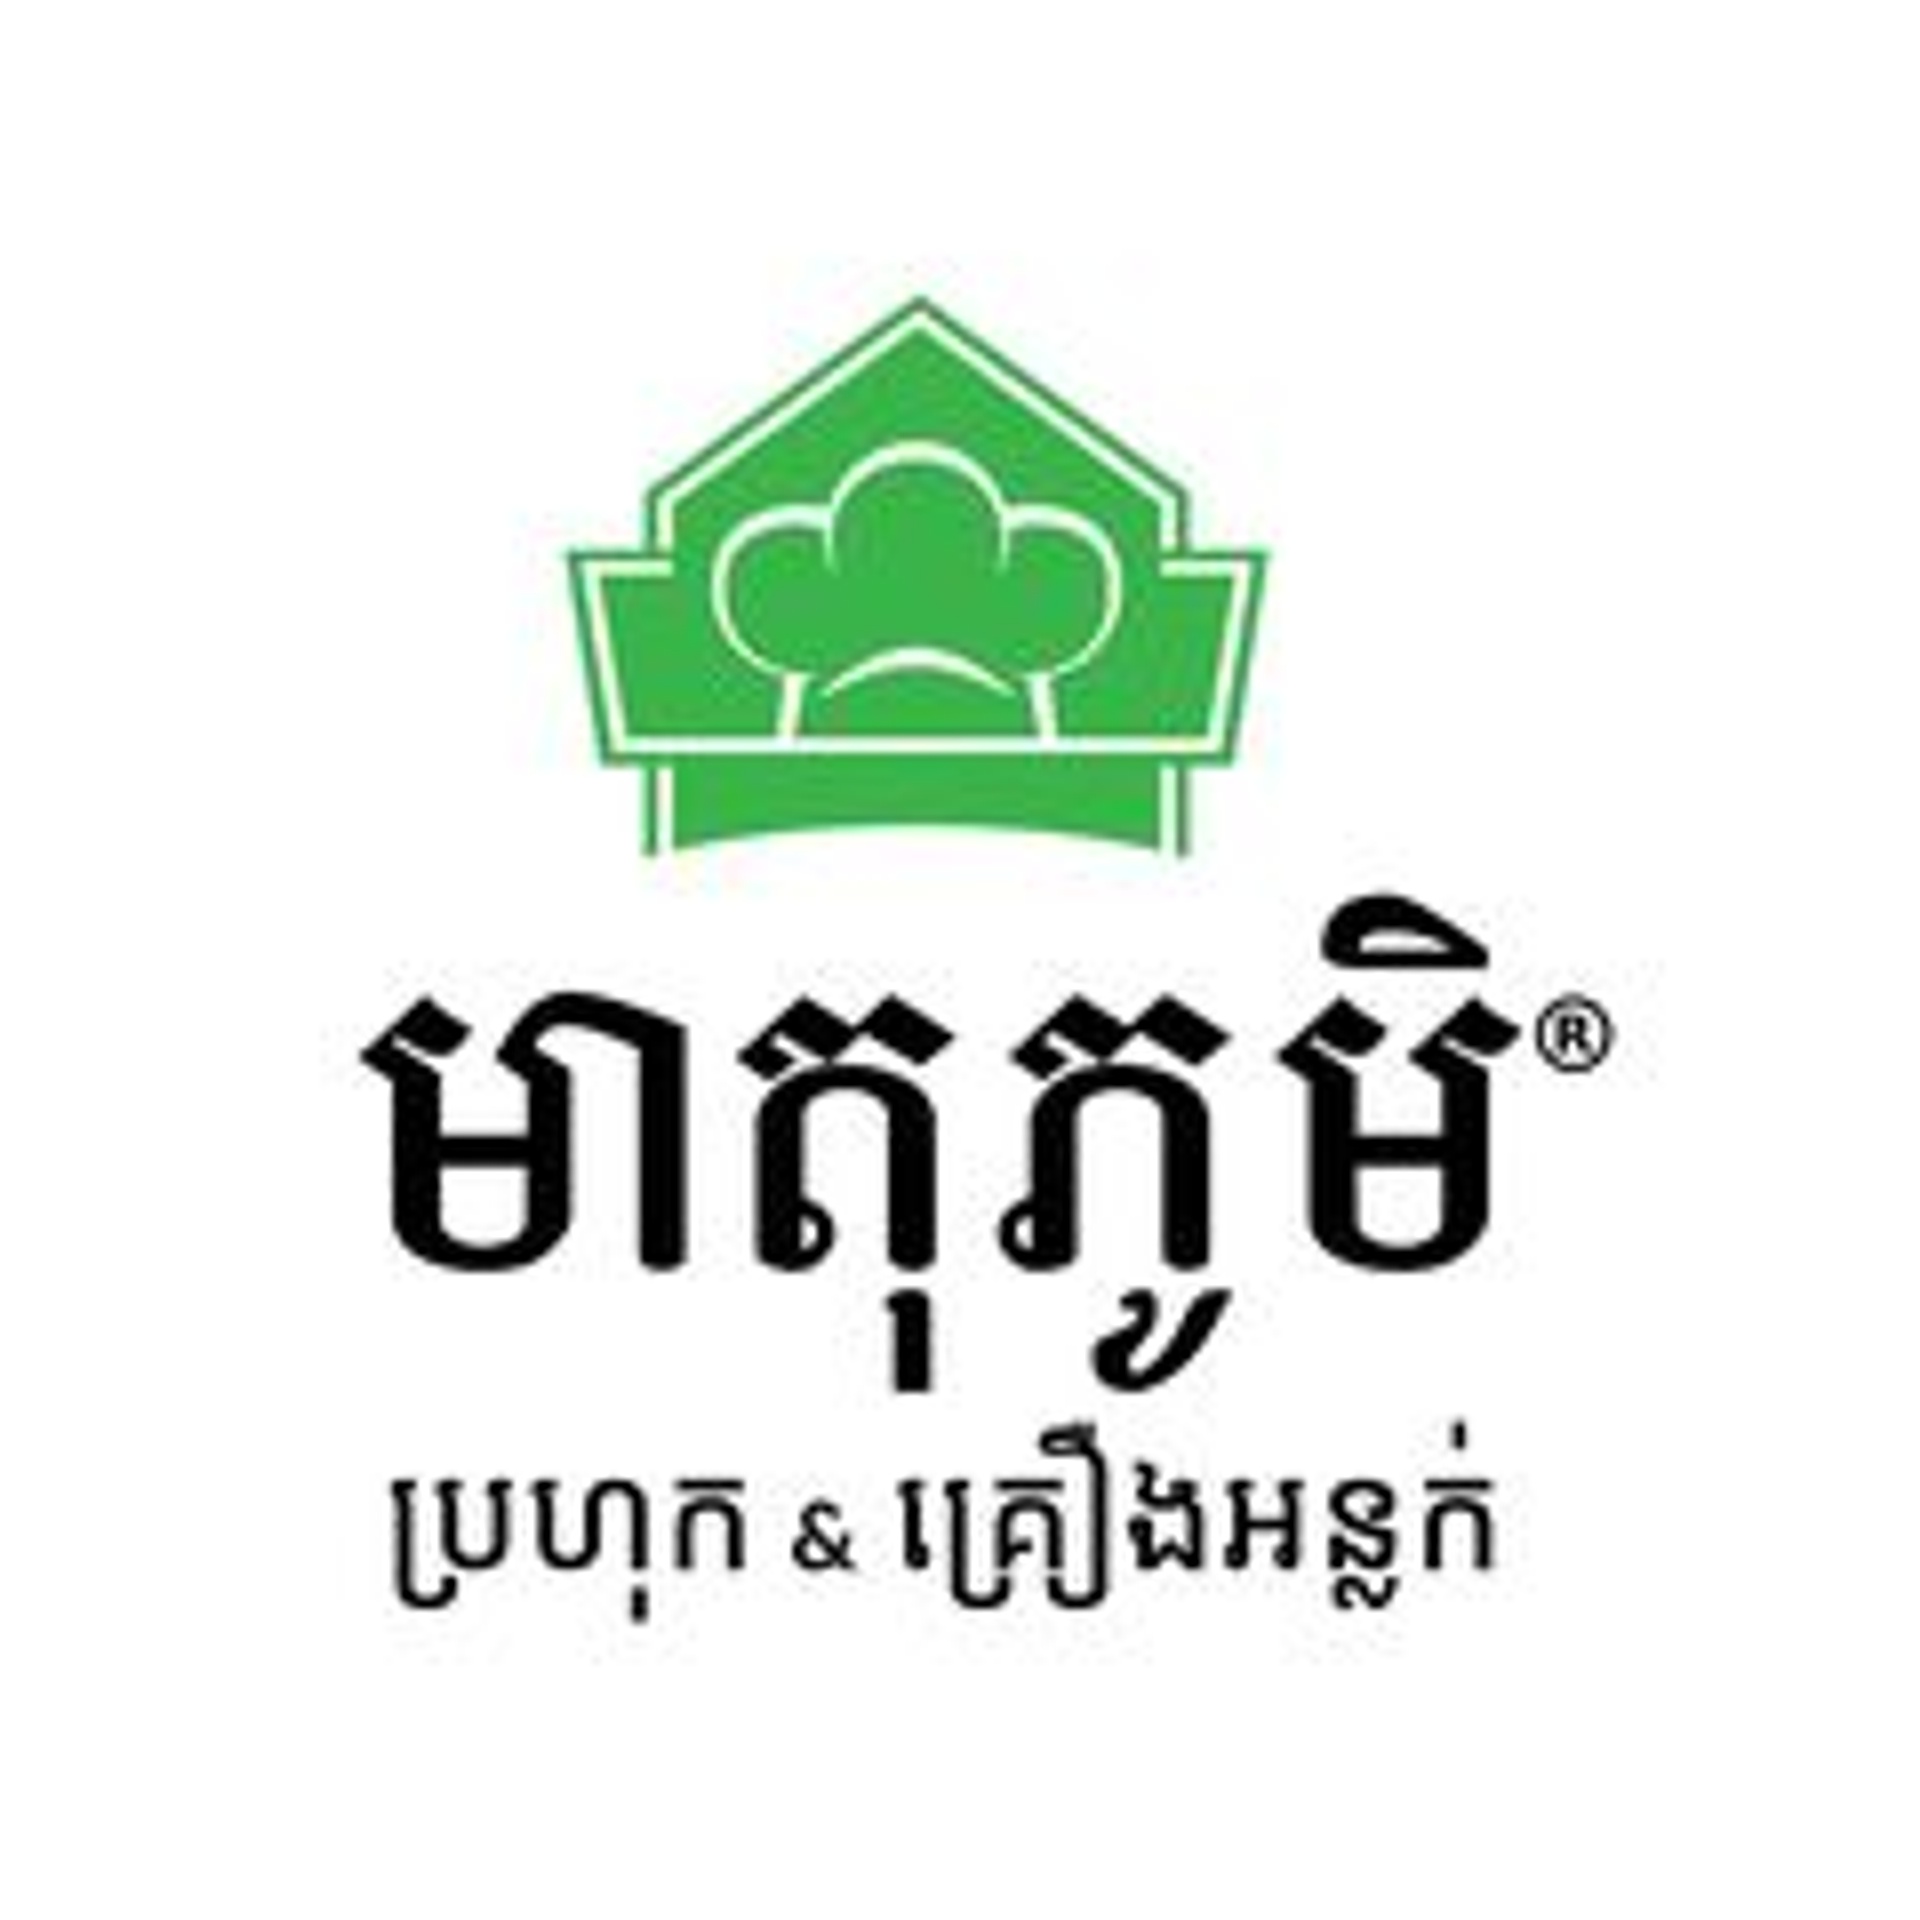 Place Logo